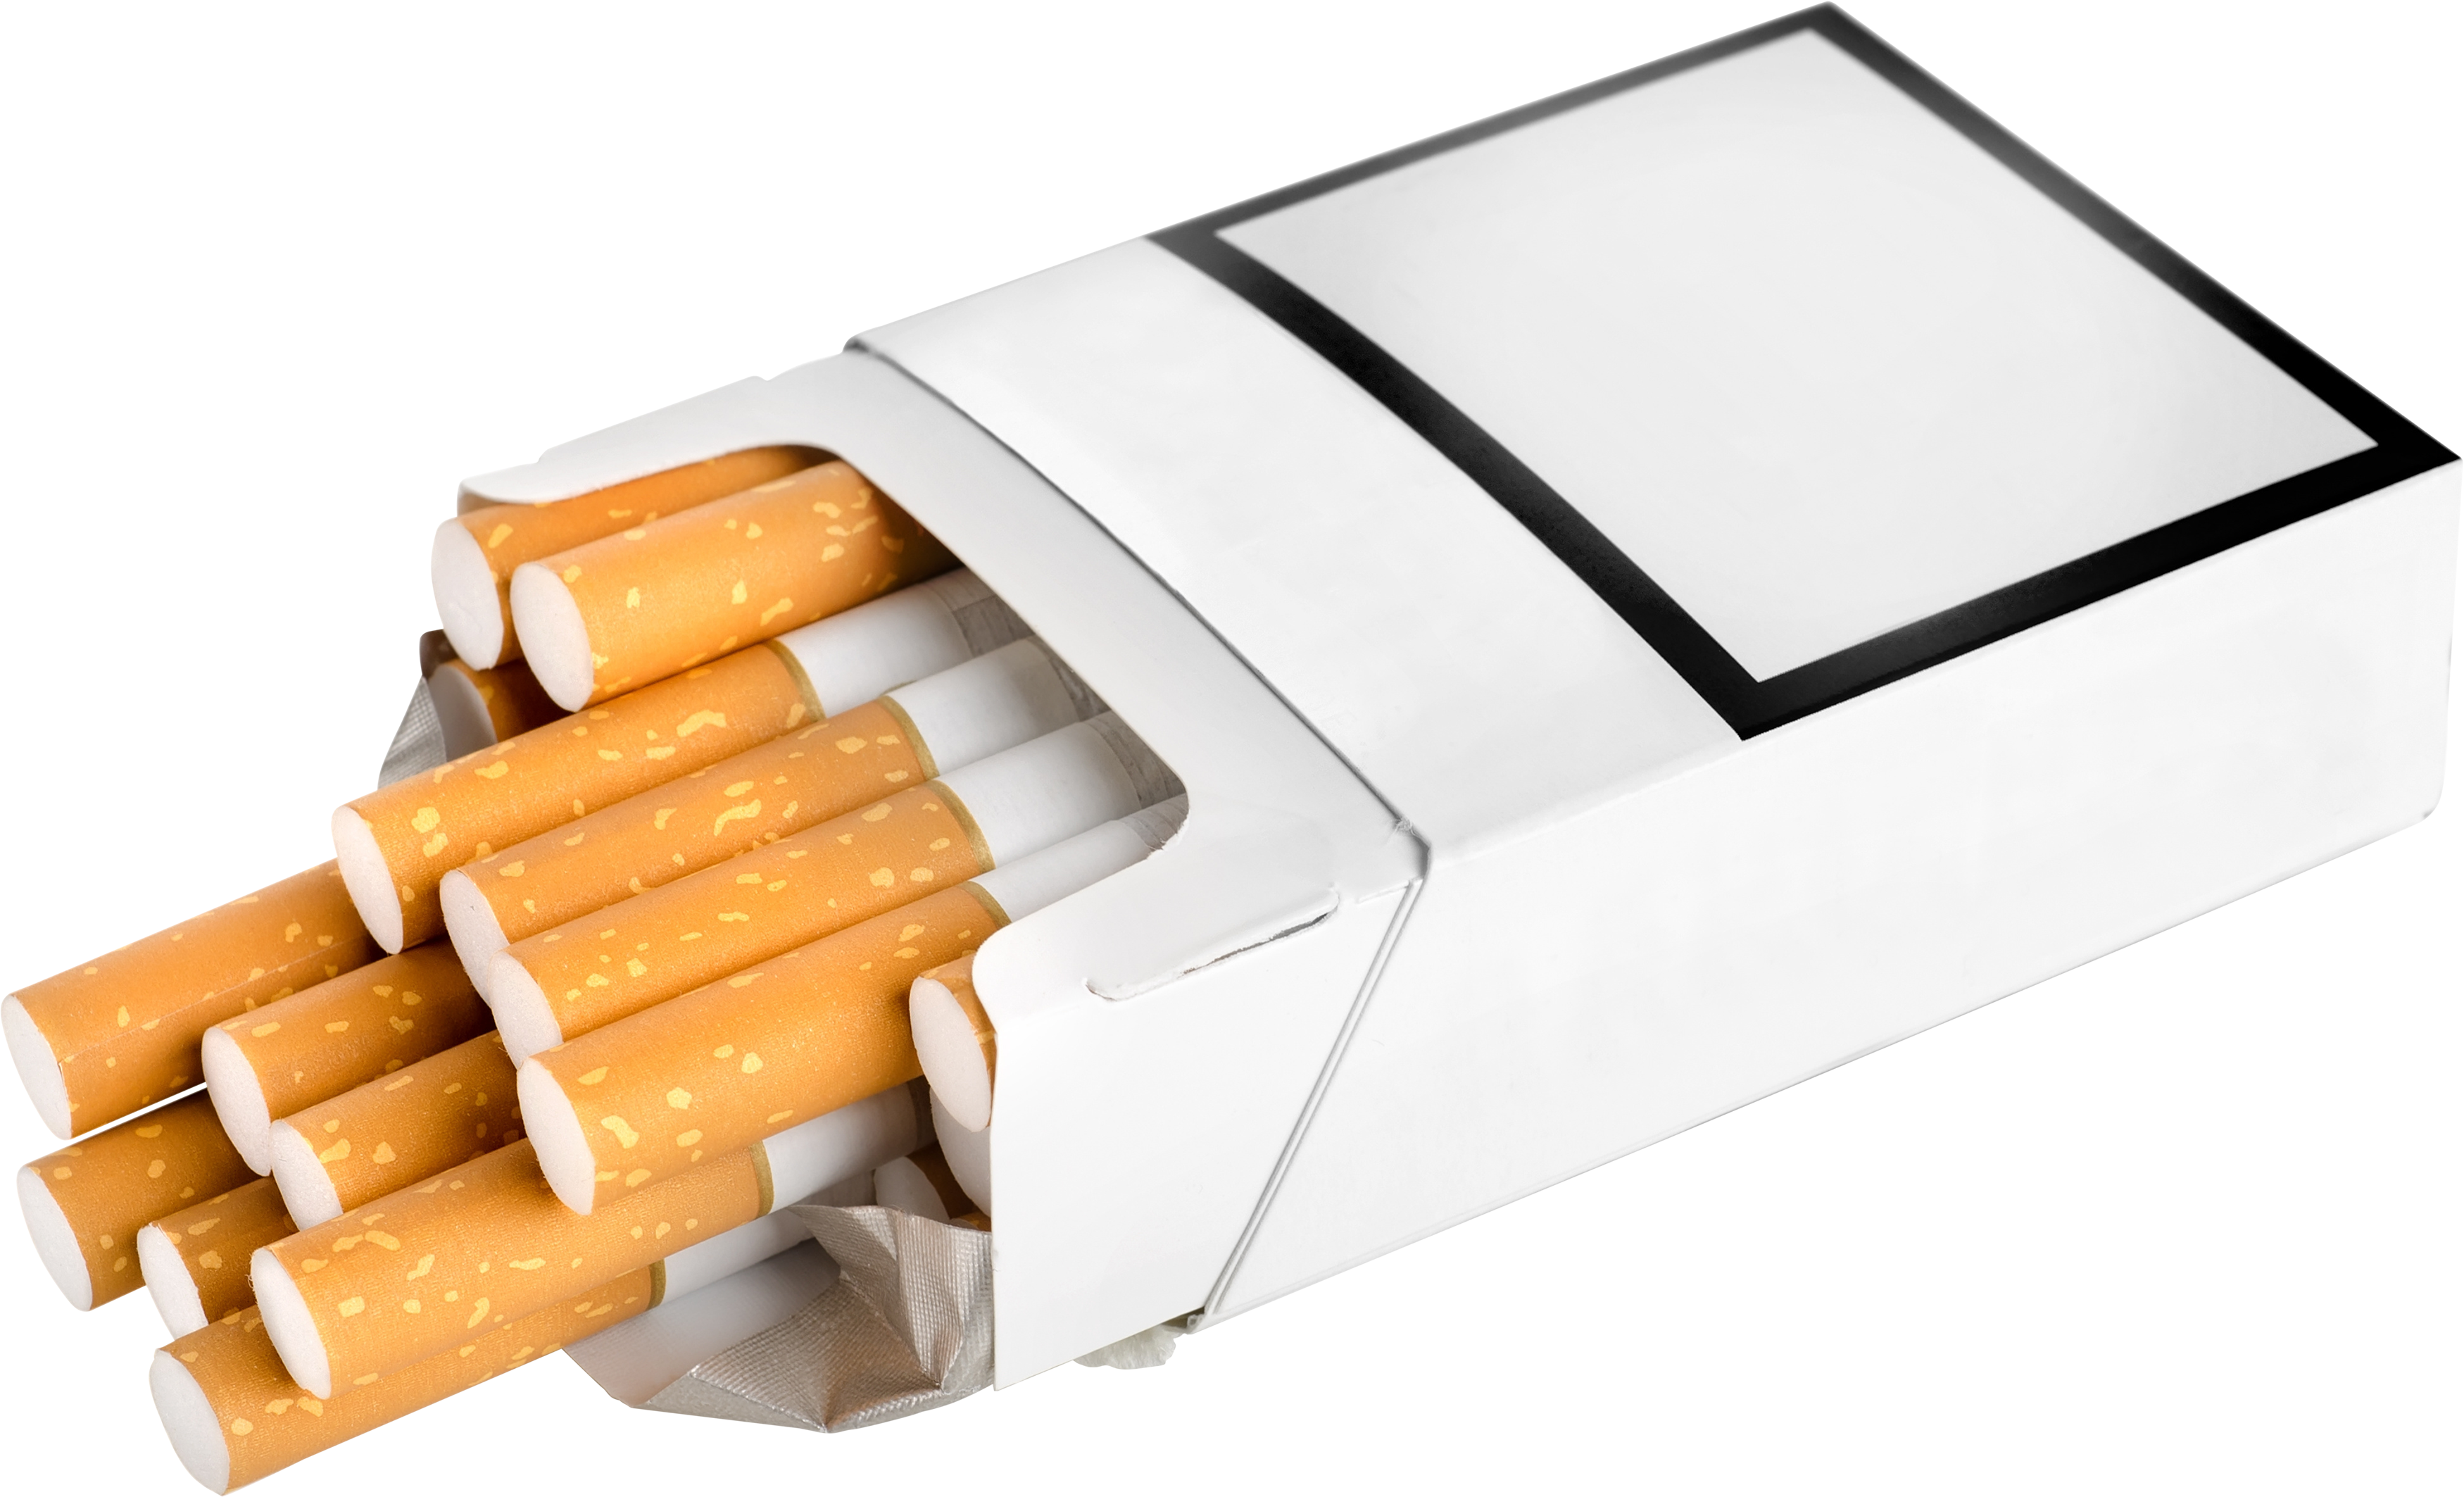 Cigarette Pack